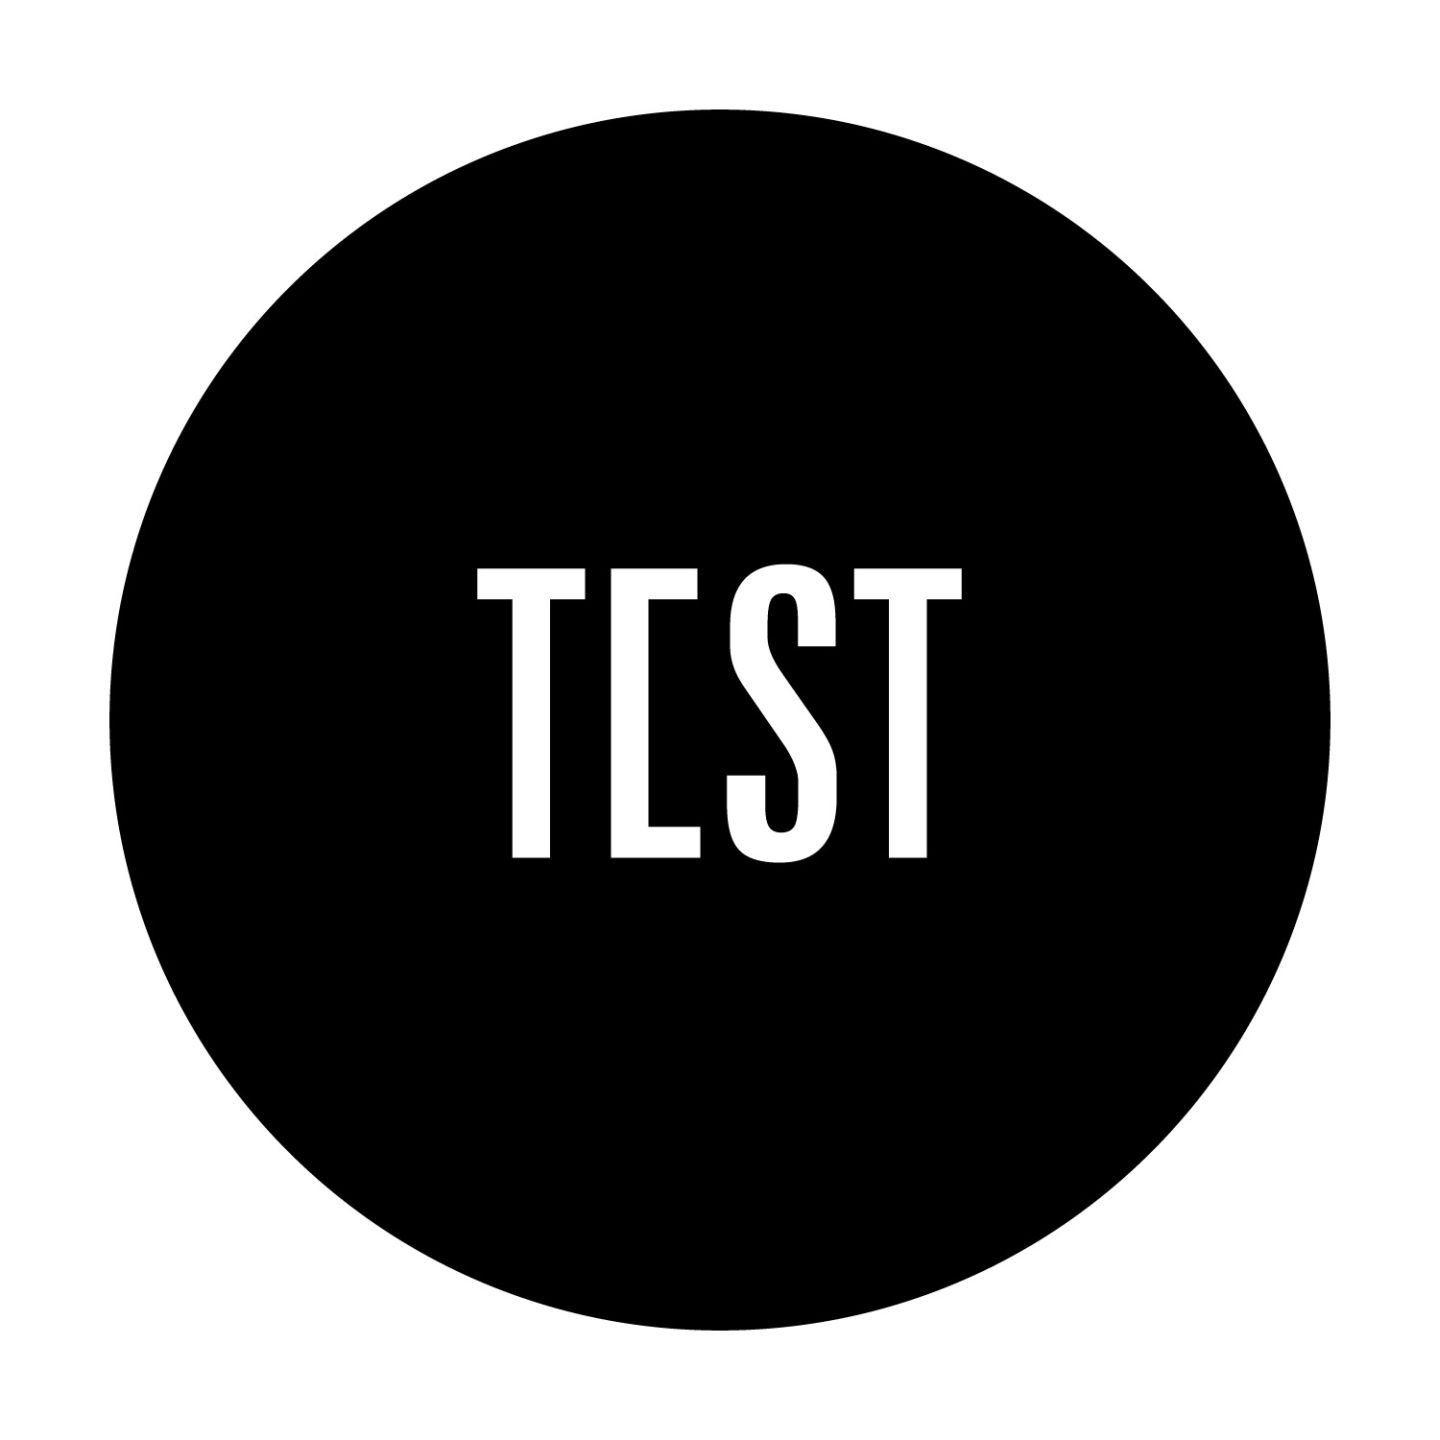 Слушать музыку тест. Тест обложка. Картинка с текстом Test. Тестик на обложку. Обложка для теста.